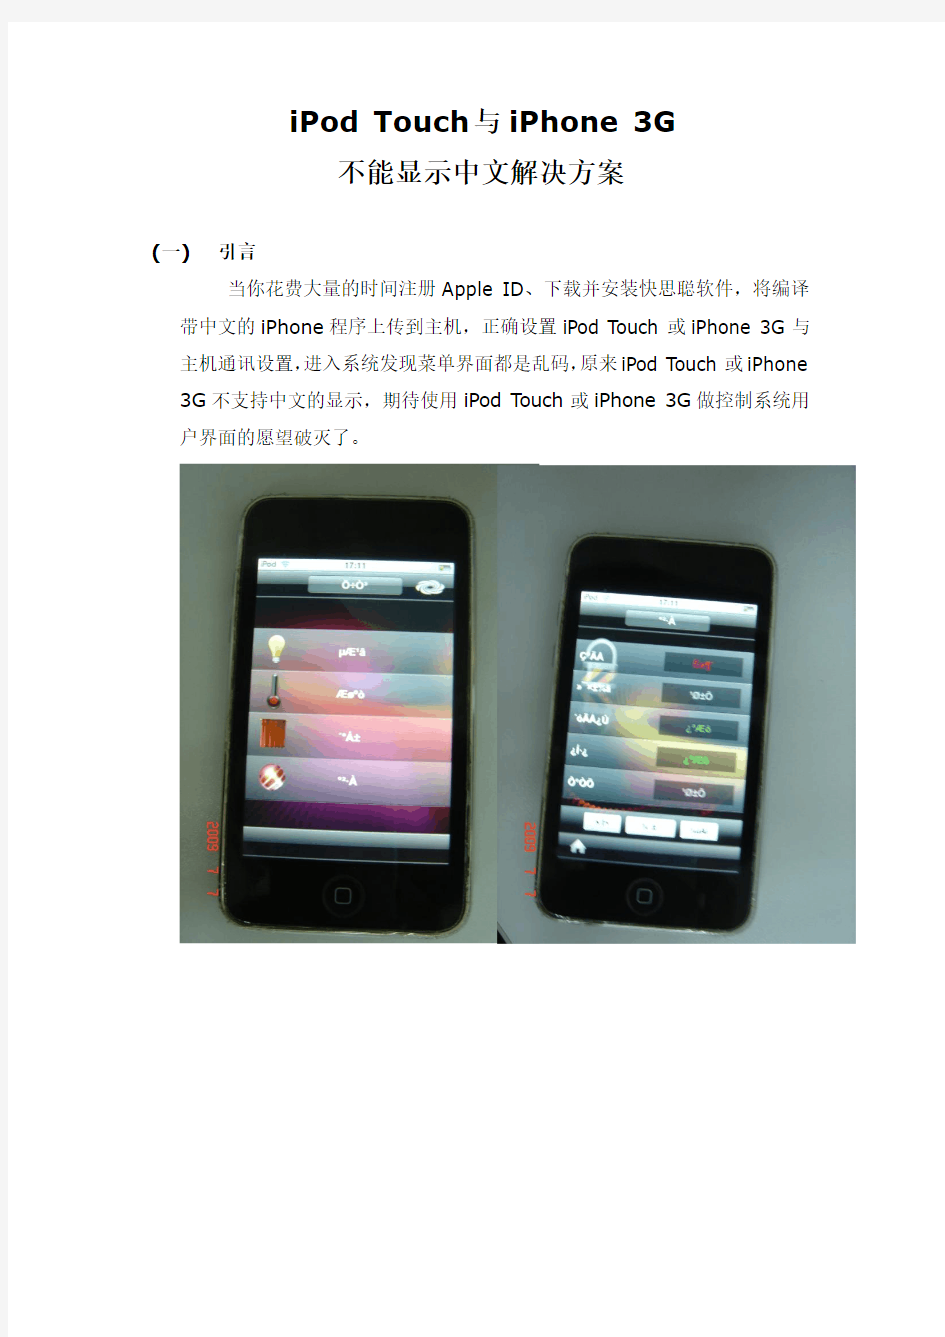 iPod Touch与iPhone 3G快思聪控制不能显示中文解决方案 V1